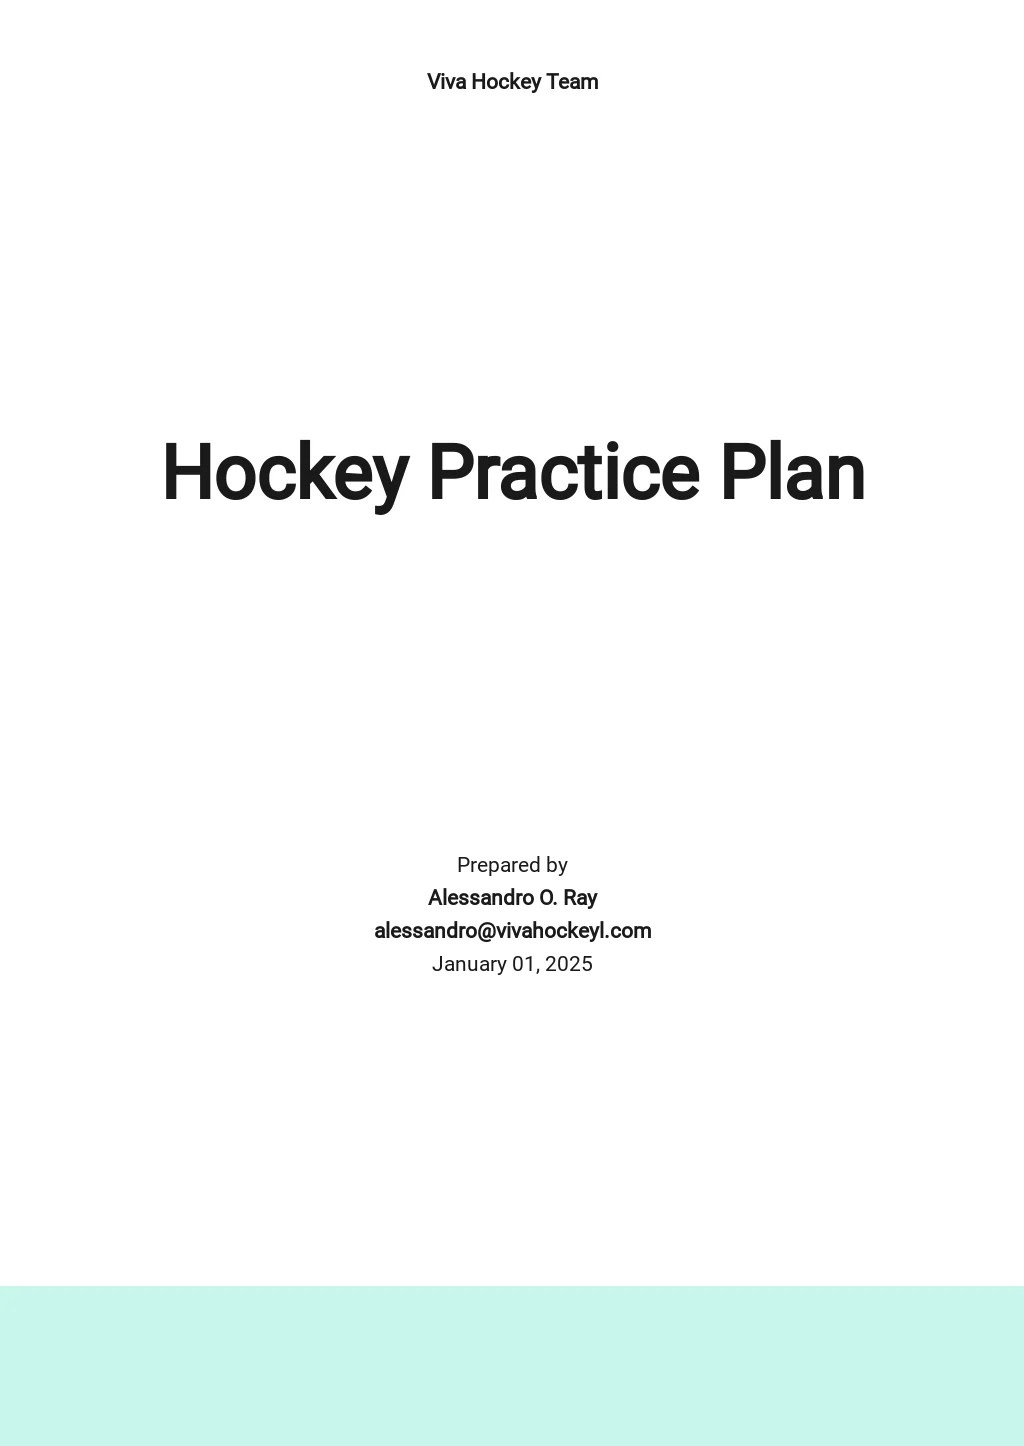 Hockey Practice Plan Template